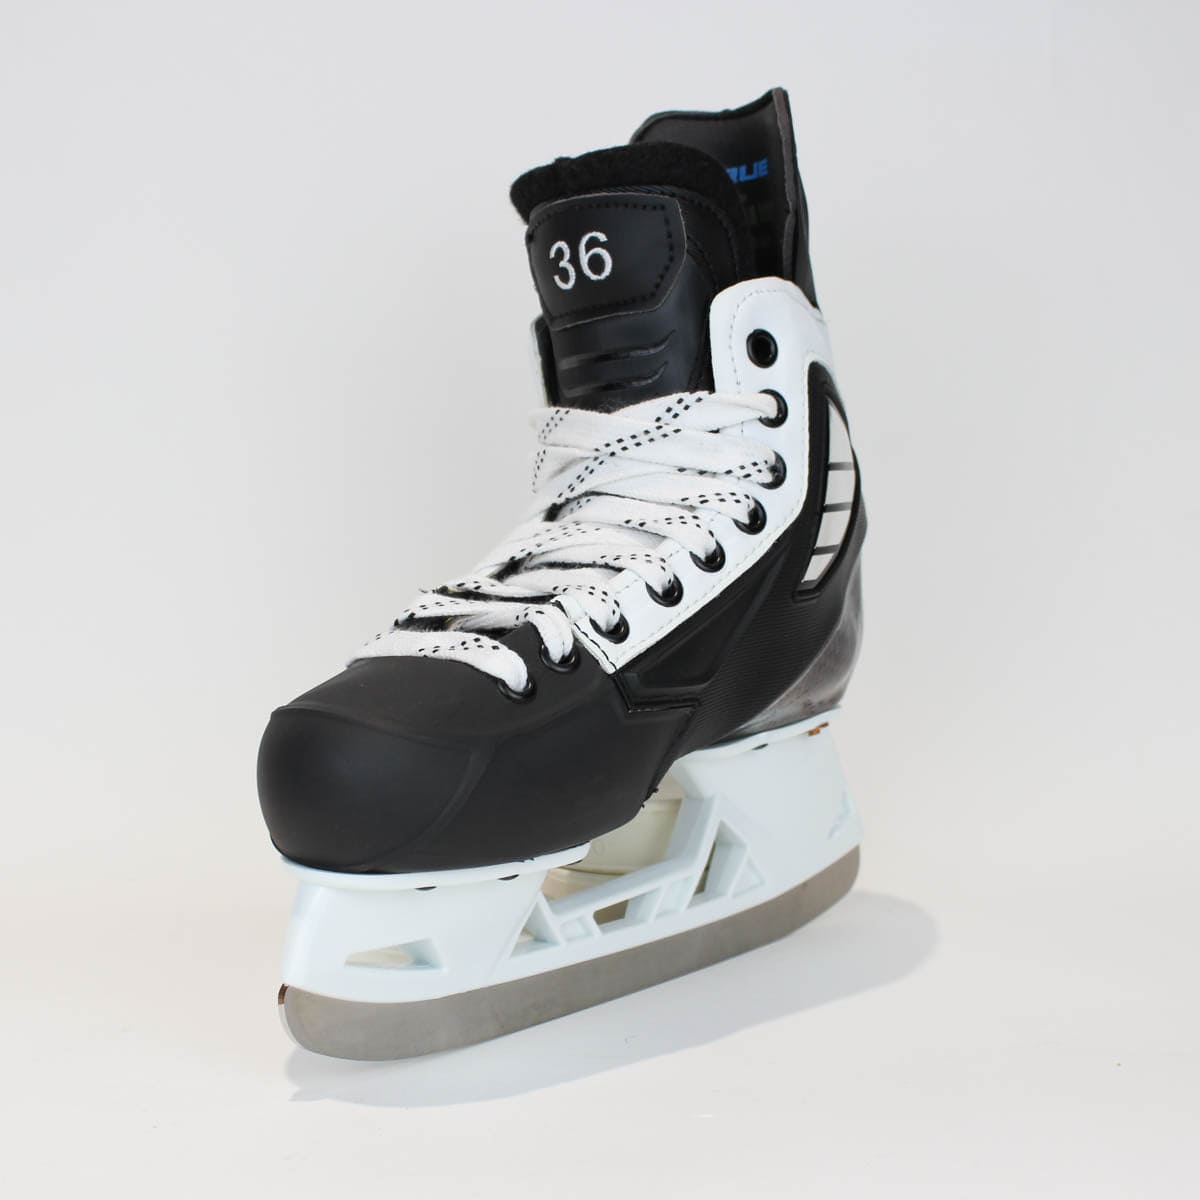 TRUE Player Junior Hockey Skates - Pro Stock - VH Holder - White Side - Size 4